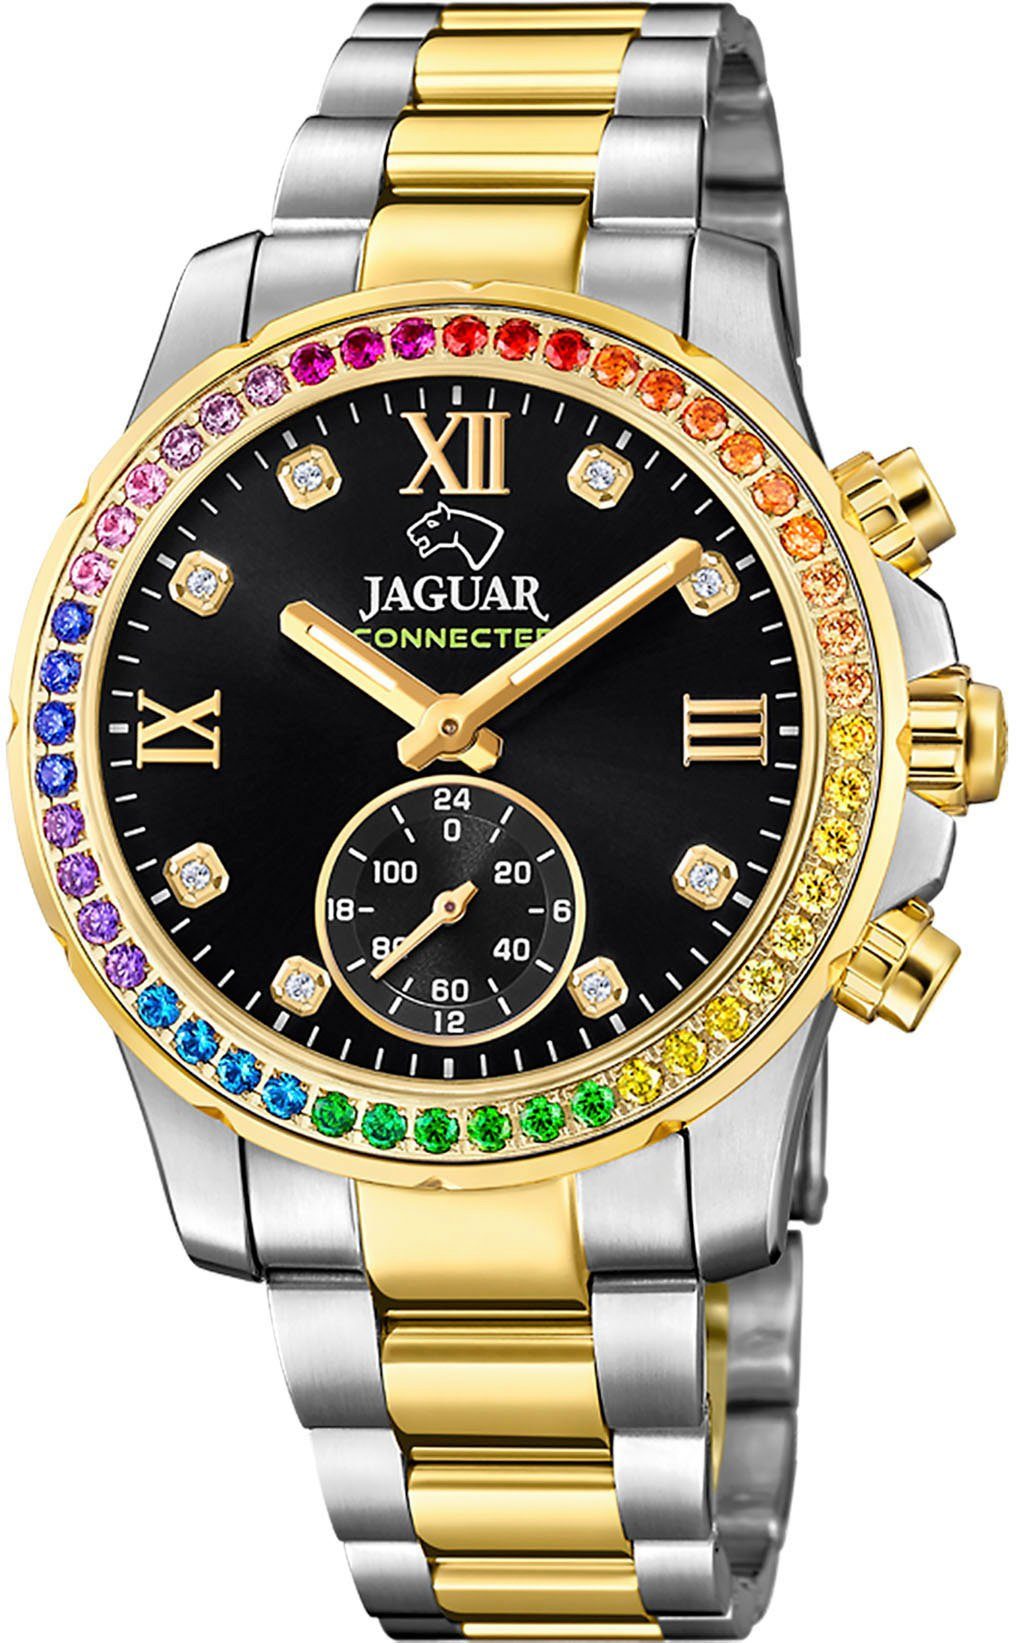 Jaguar Chronograph Connected, J982/5, Armbanduhr, Damenuhr, Saphirglas, Stoppfunktion, Swiss Made